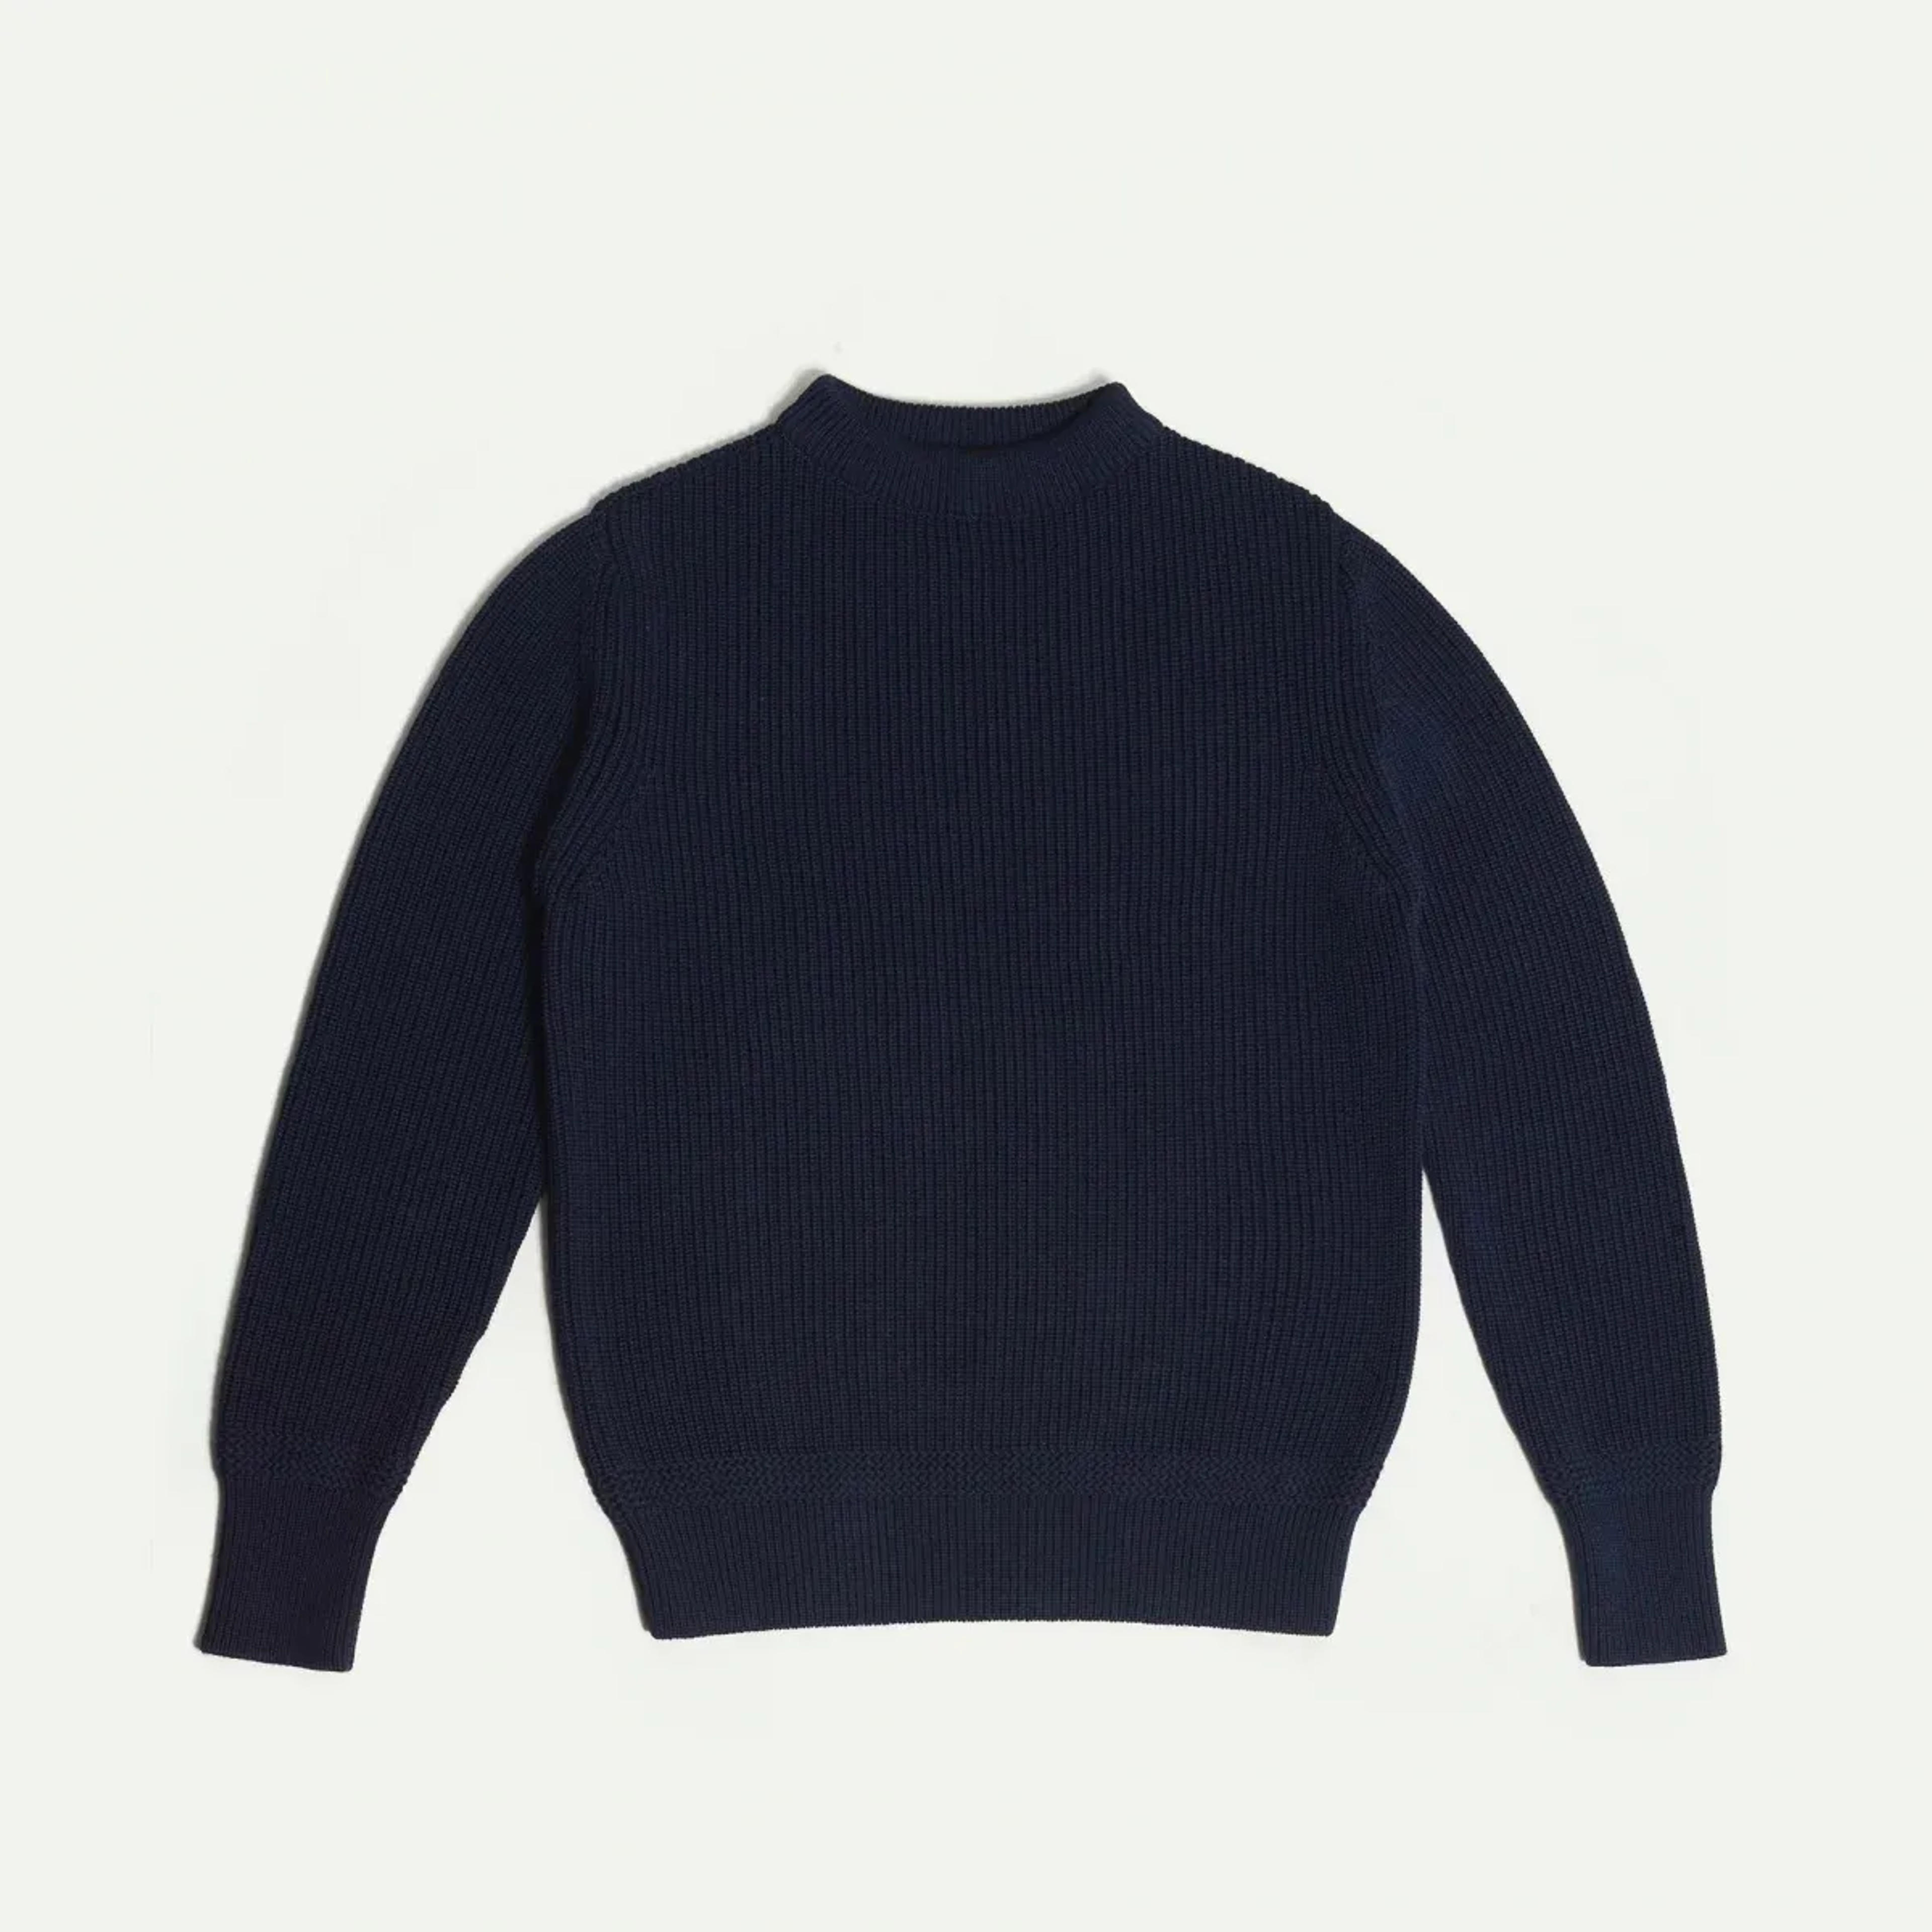 bleu-de-chauffe.com/en/men-s-sailor-jumper/1426-cancale-sweater-100-cotton-navy-blue.html